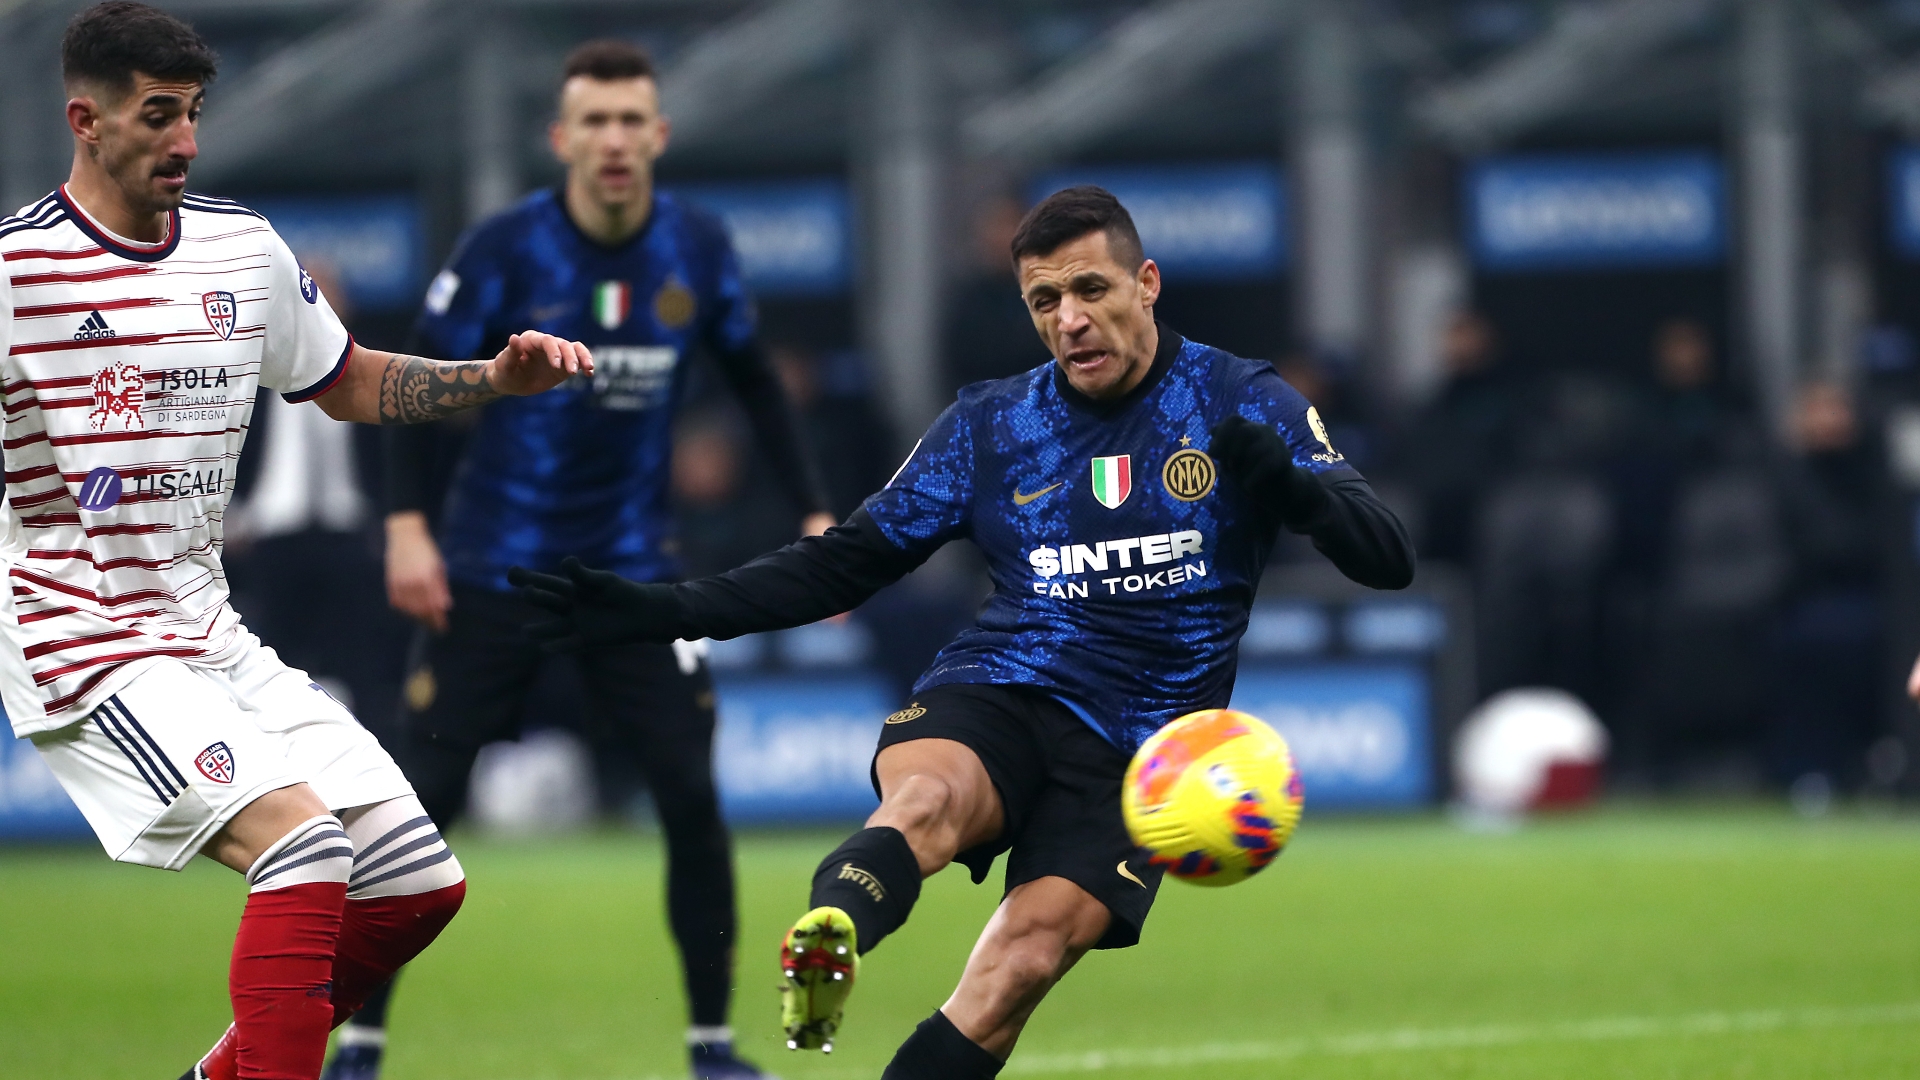 Alexis Sánchez, reserva letal en Inter: fantástica volea para el 2-0 al Cagliari | Goal.com